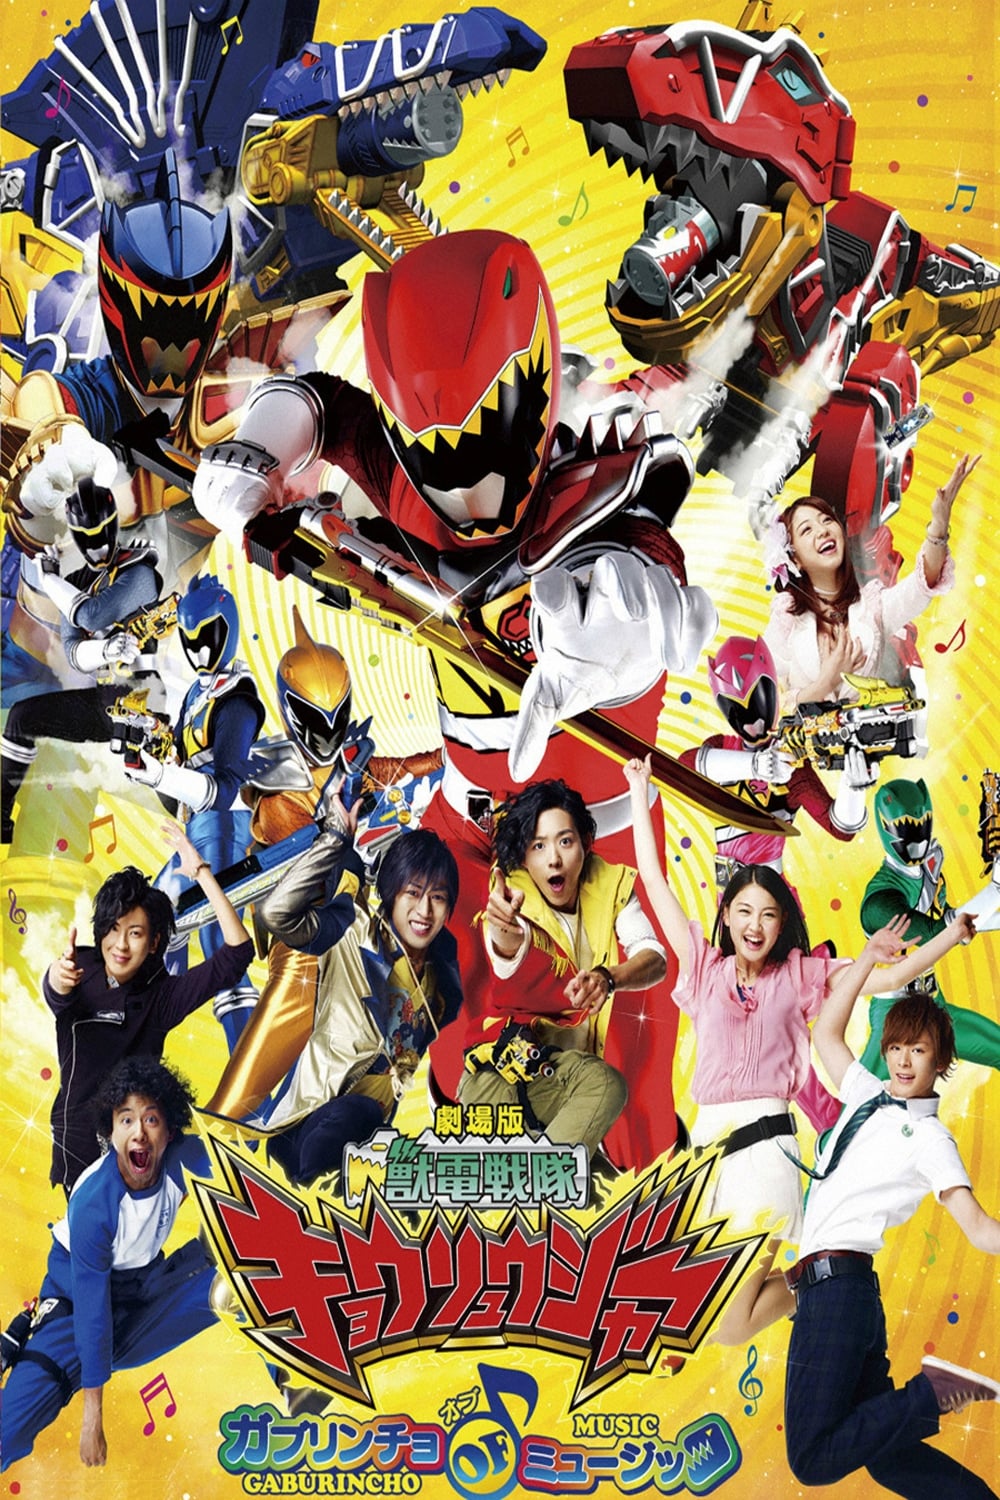 Zyuden Sentai Kyoryuger The Movie: The CHOMPACHOMP of Music!